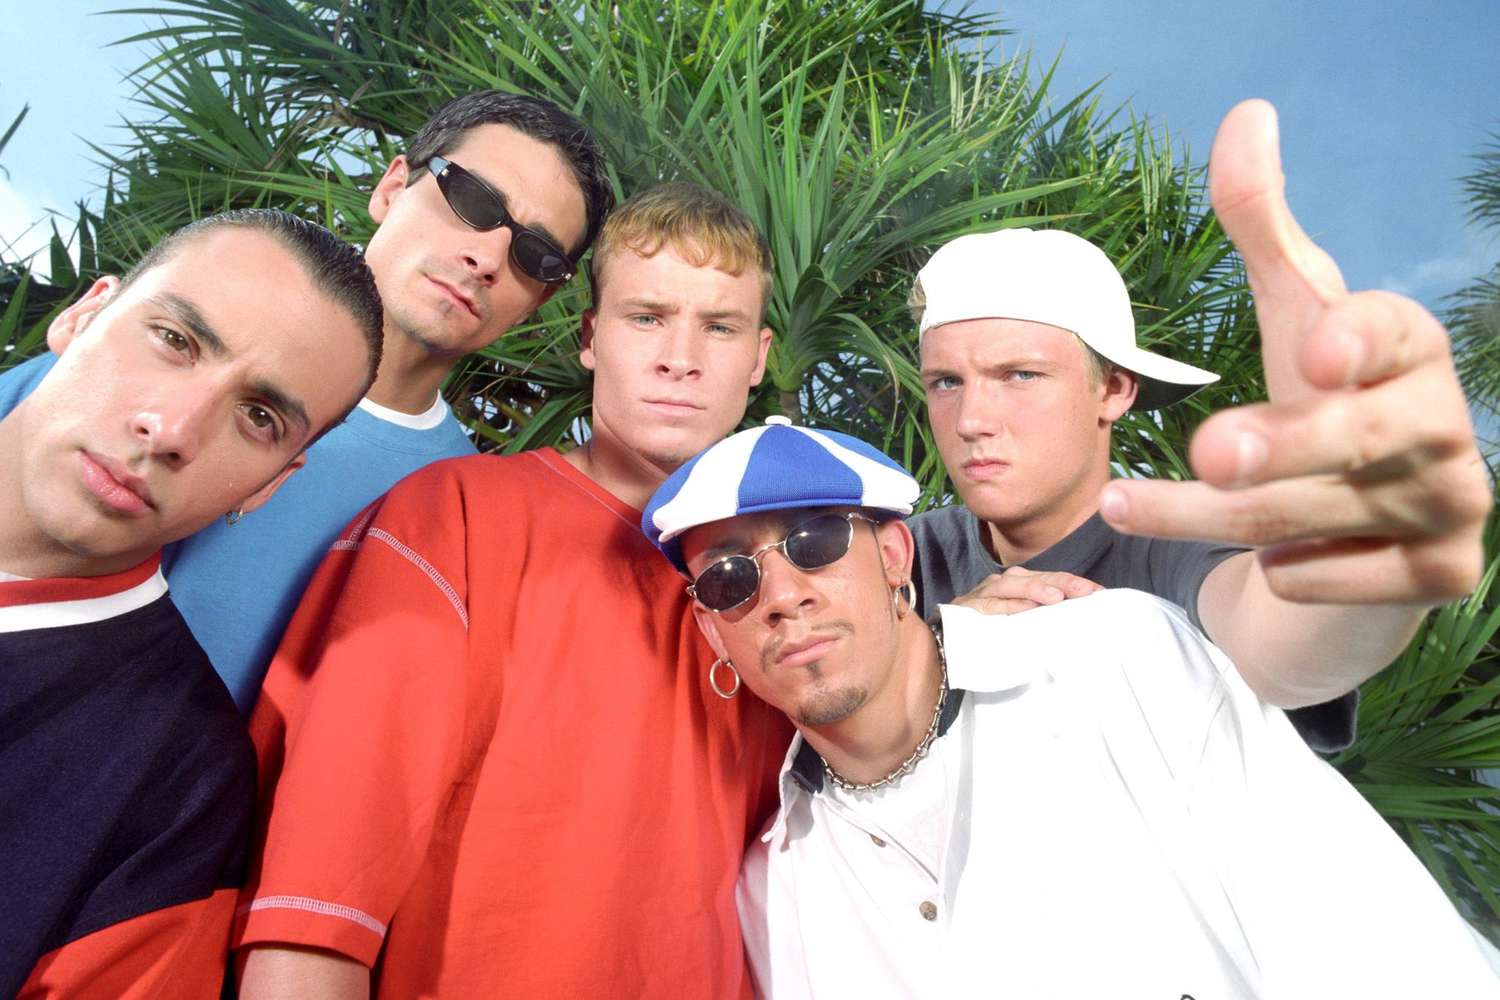 Backstreet Boys Portrait Session